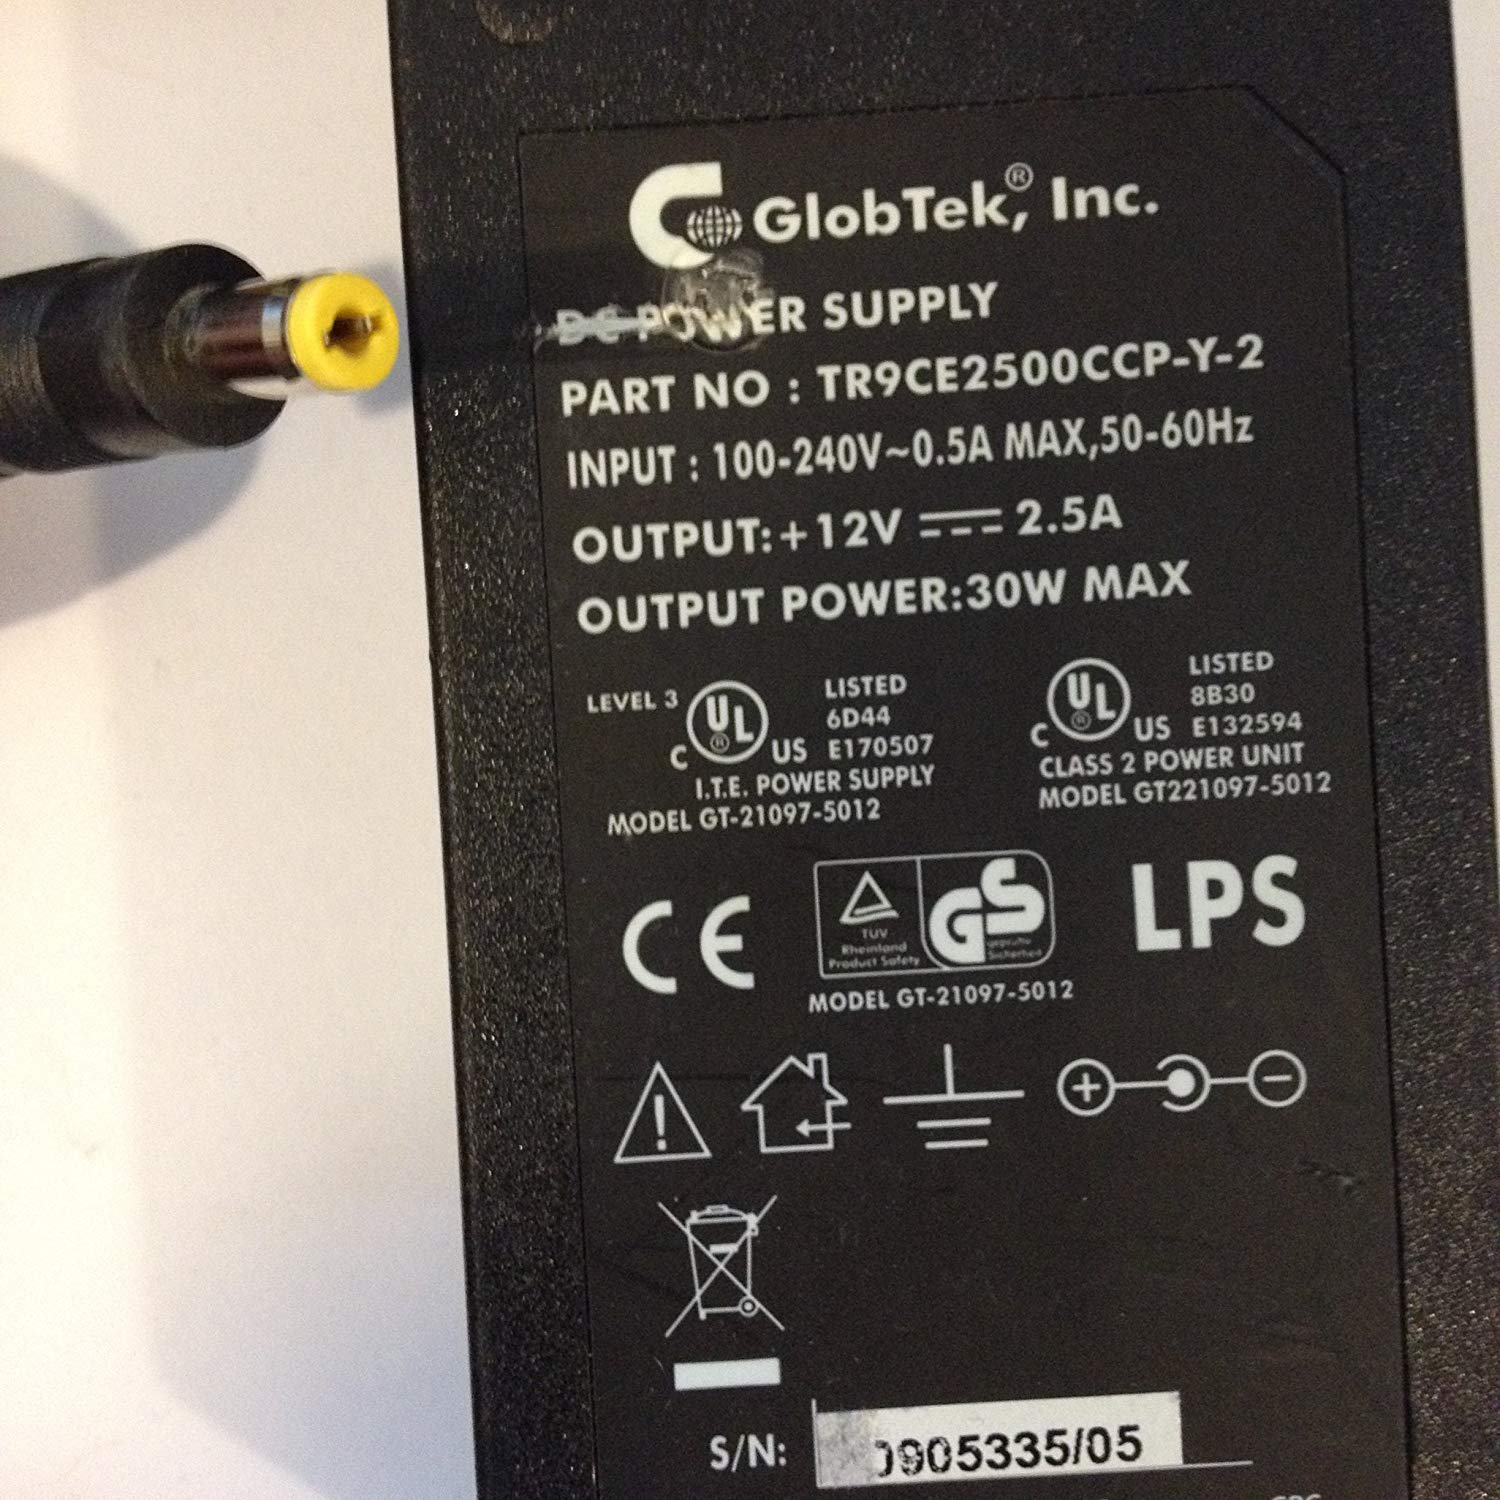 New GLOBTEK INC 12V 2.5A TR9CE2500CCP-Y-2 5.5MM X 2.1MM Power Adapter Supply